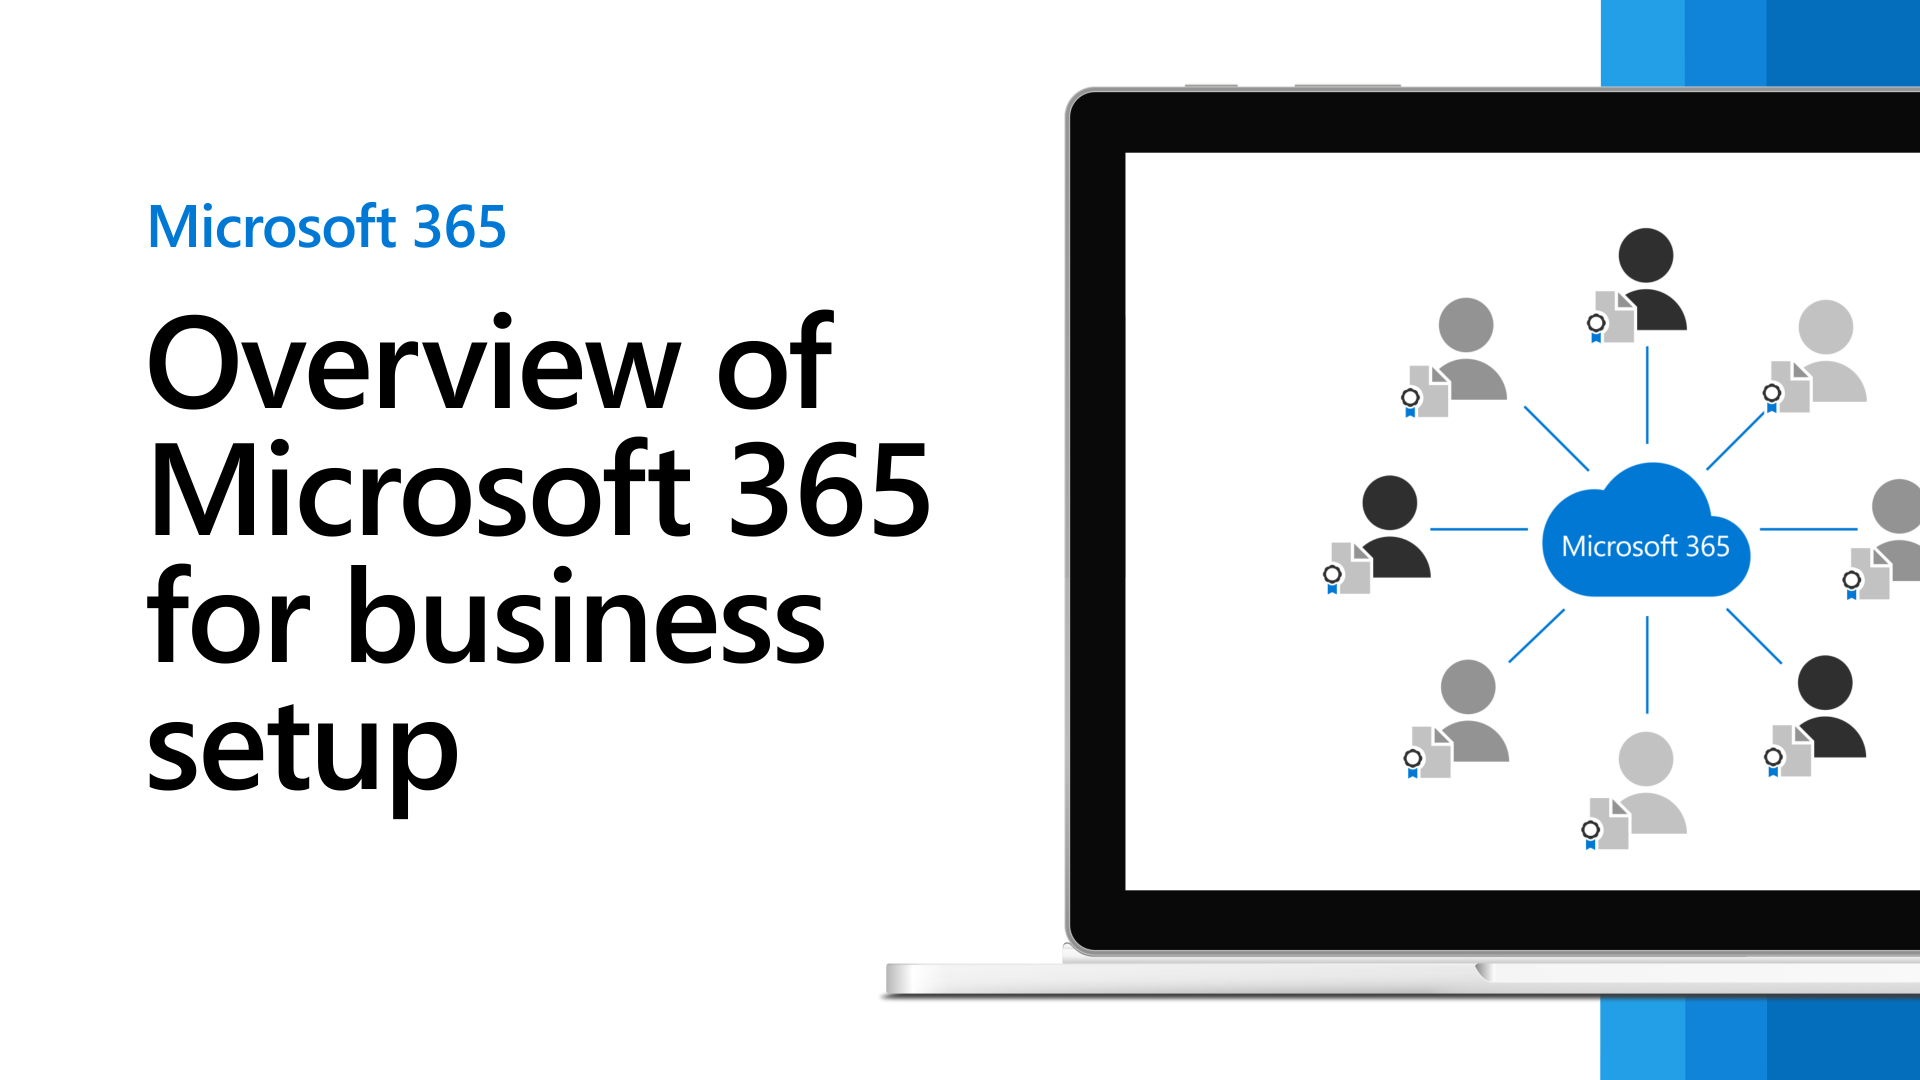 Planear la configuración de Microsoft 365 para empresas - Microsoft 365  admin | Microsoft Learn